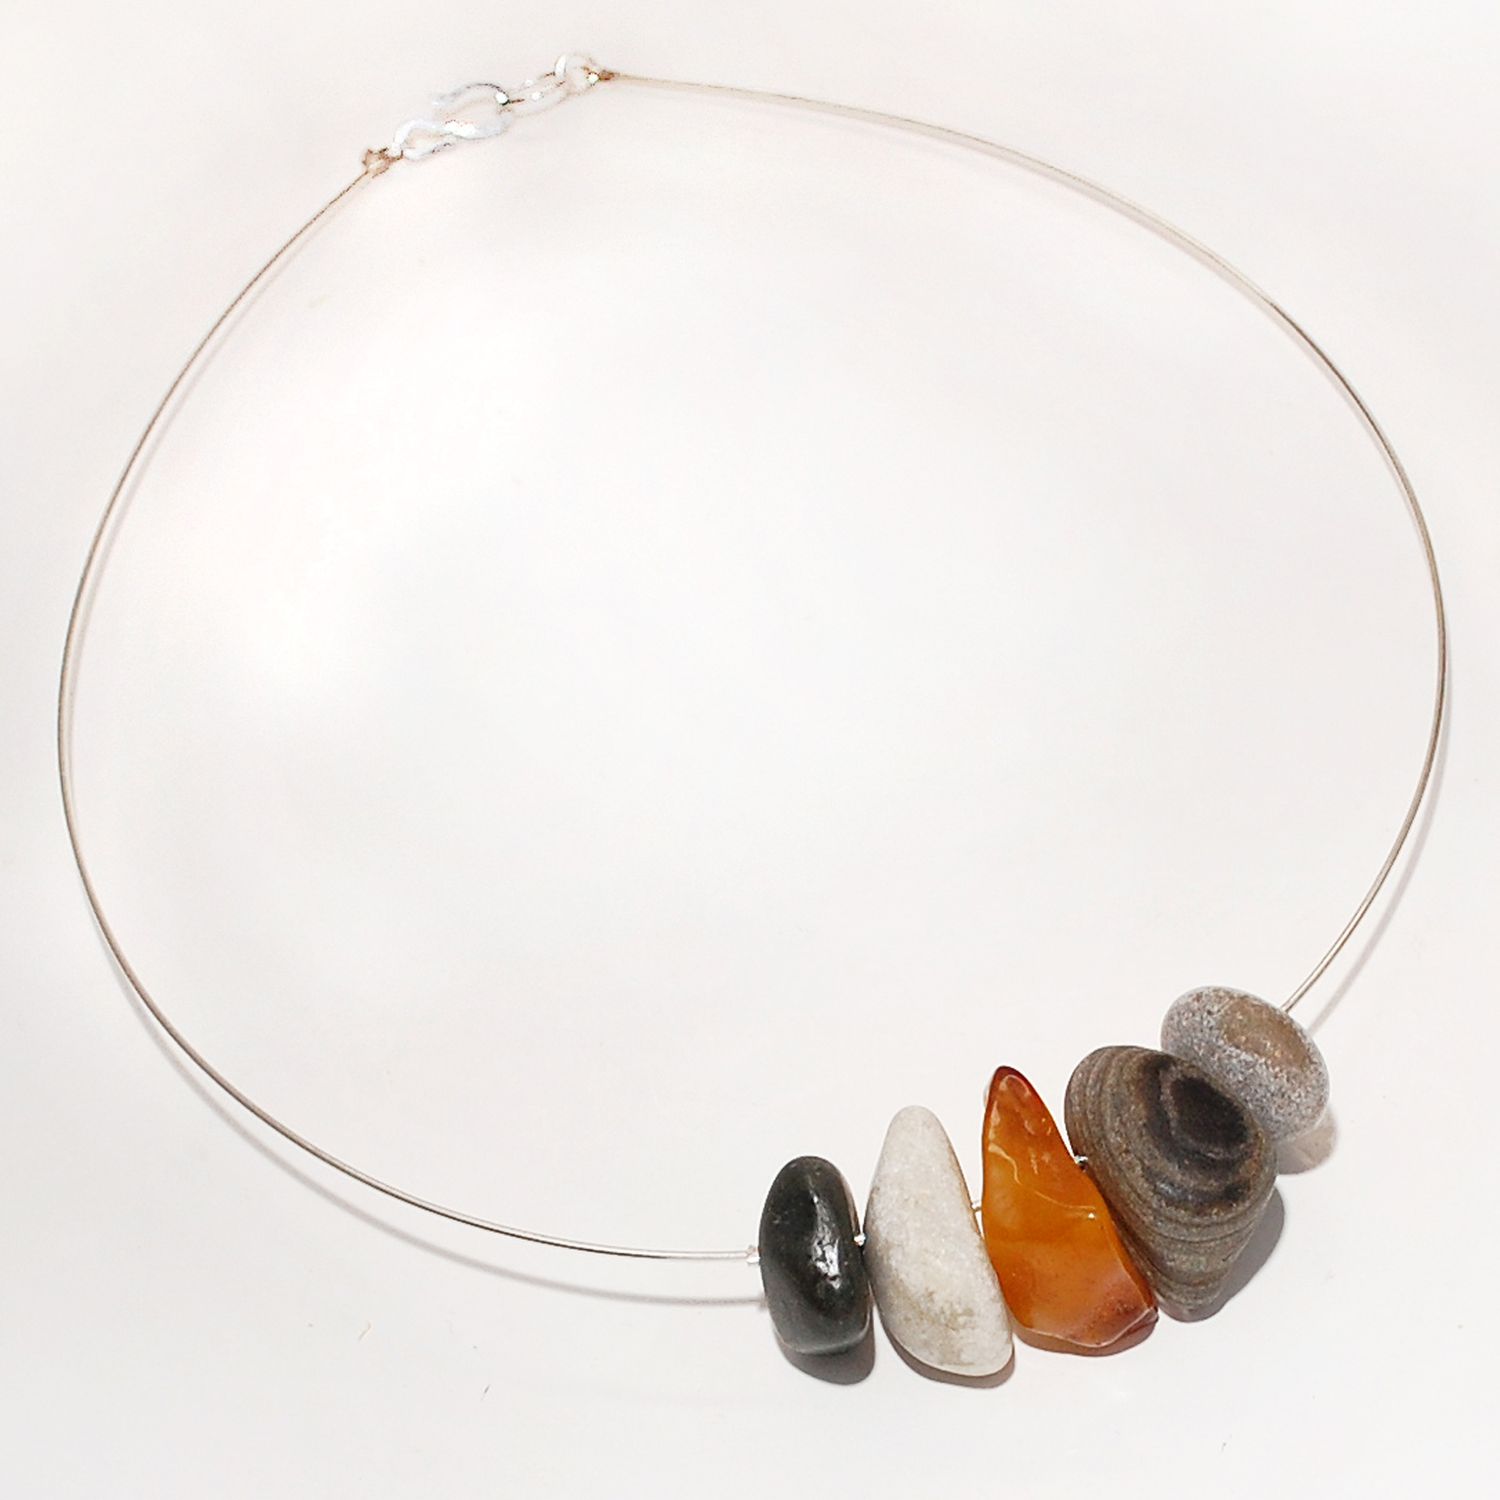 Tetyana Lypka: Pebble & Amber Necklace Product Image 1 of 1